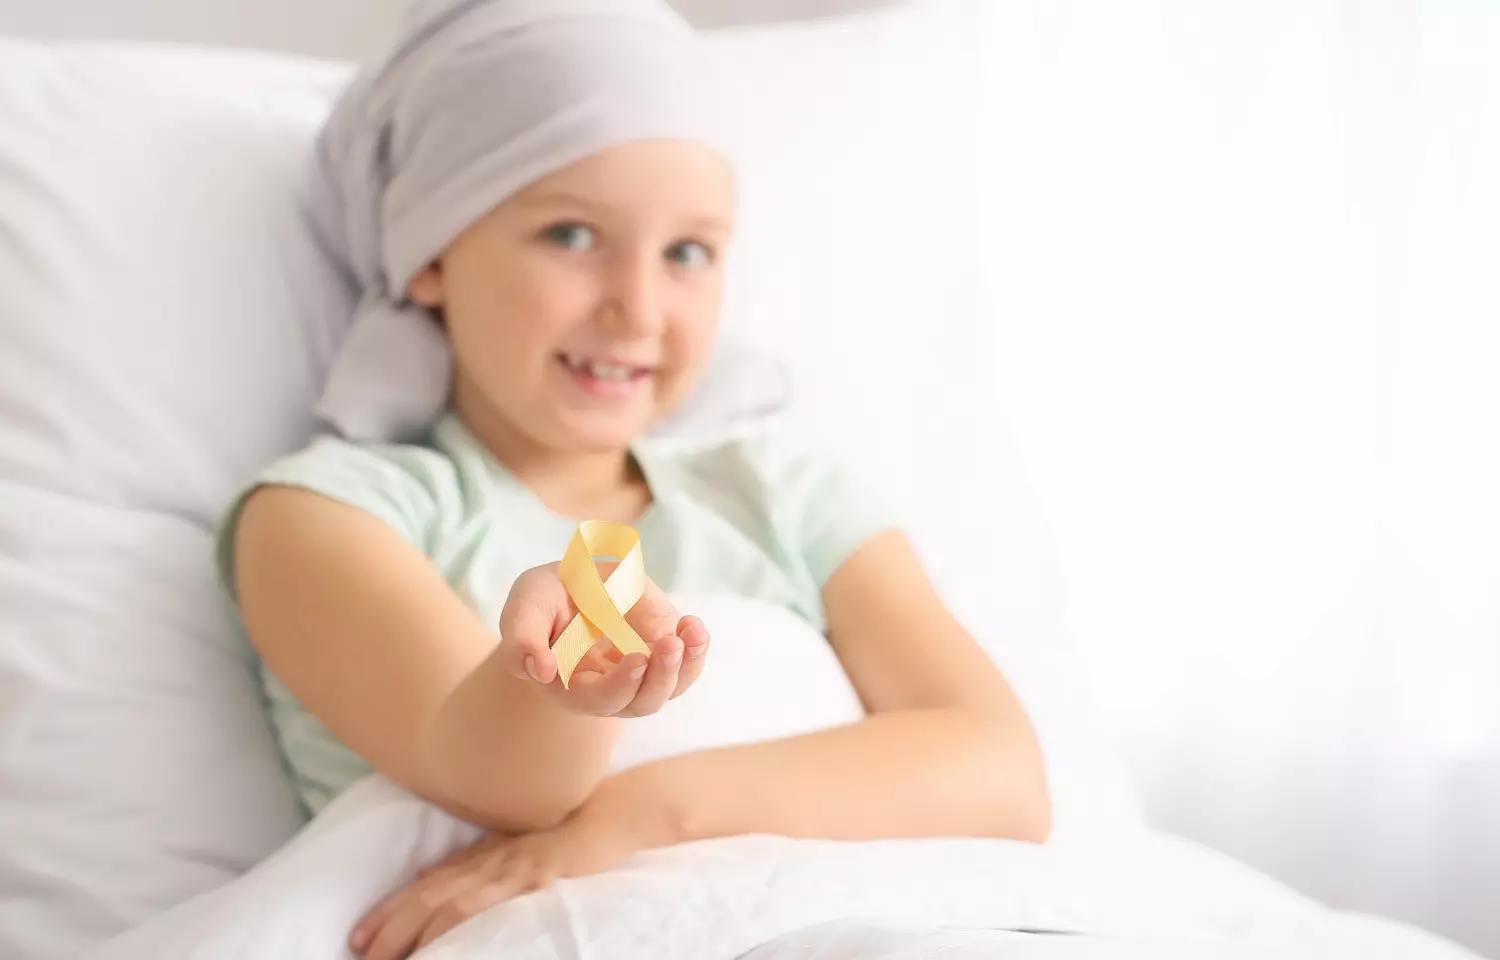 Methionine restriction may improve aggressive brain cancer prognosis in children